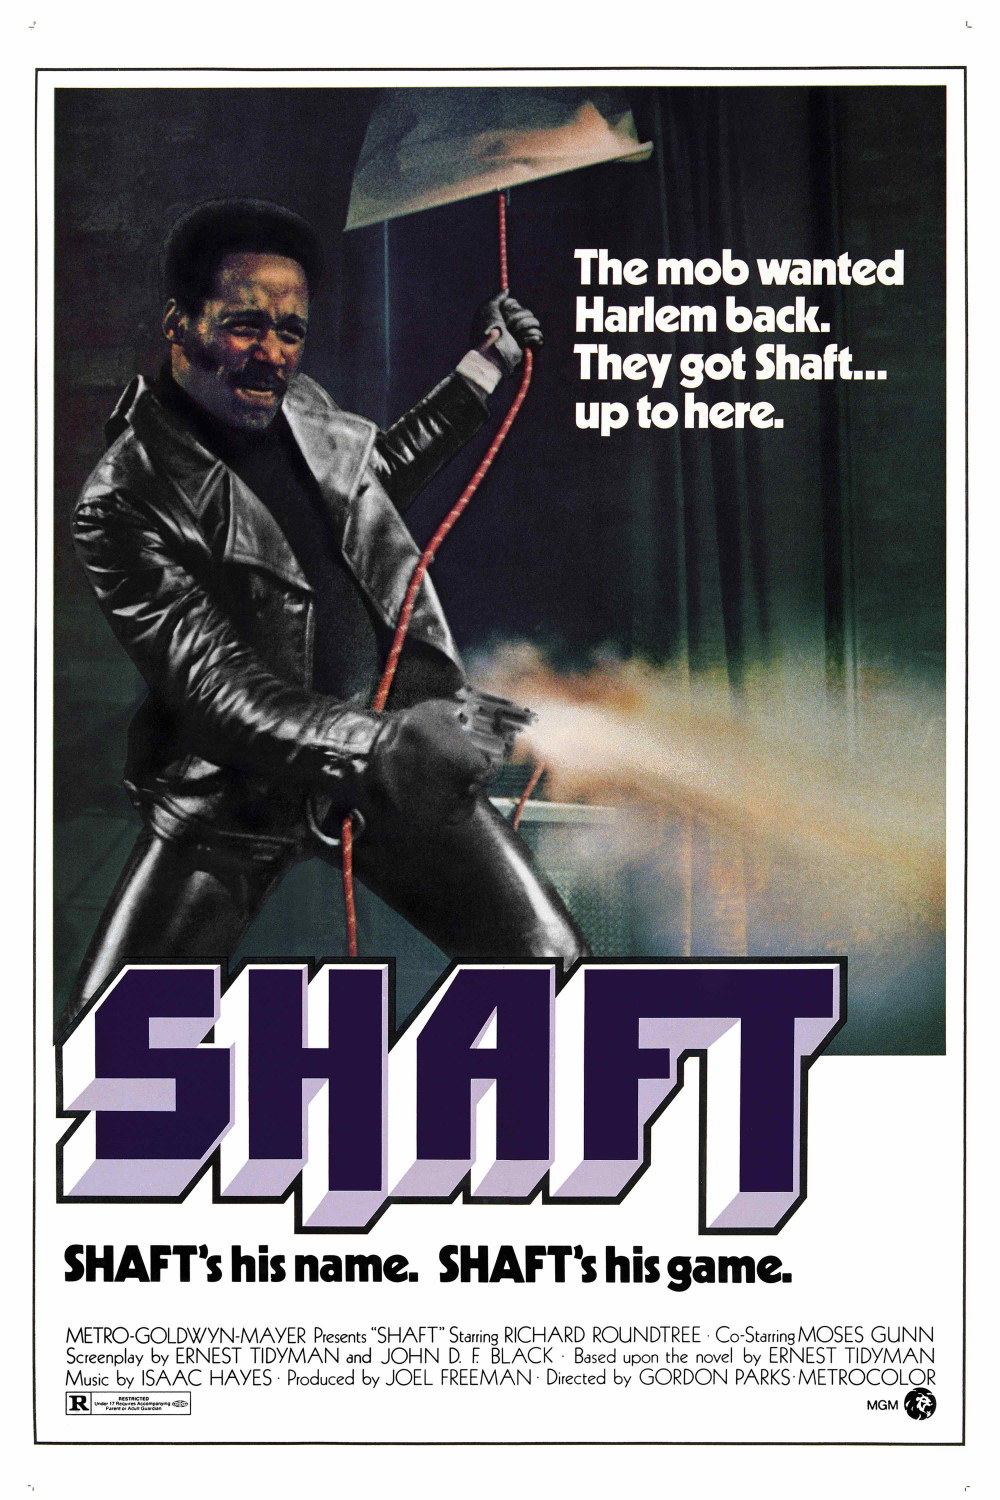 Shaft (1971) Poster